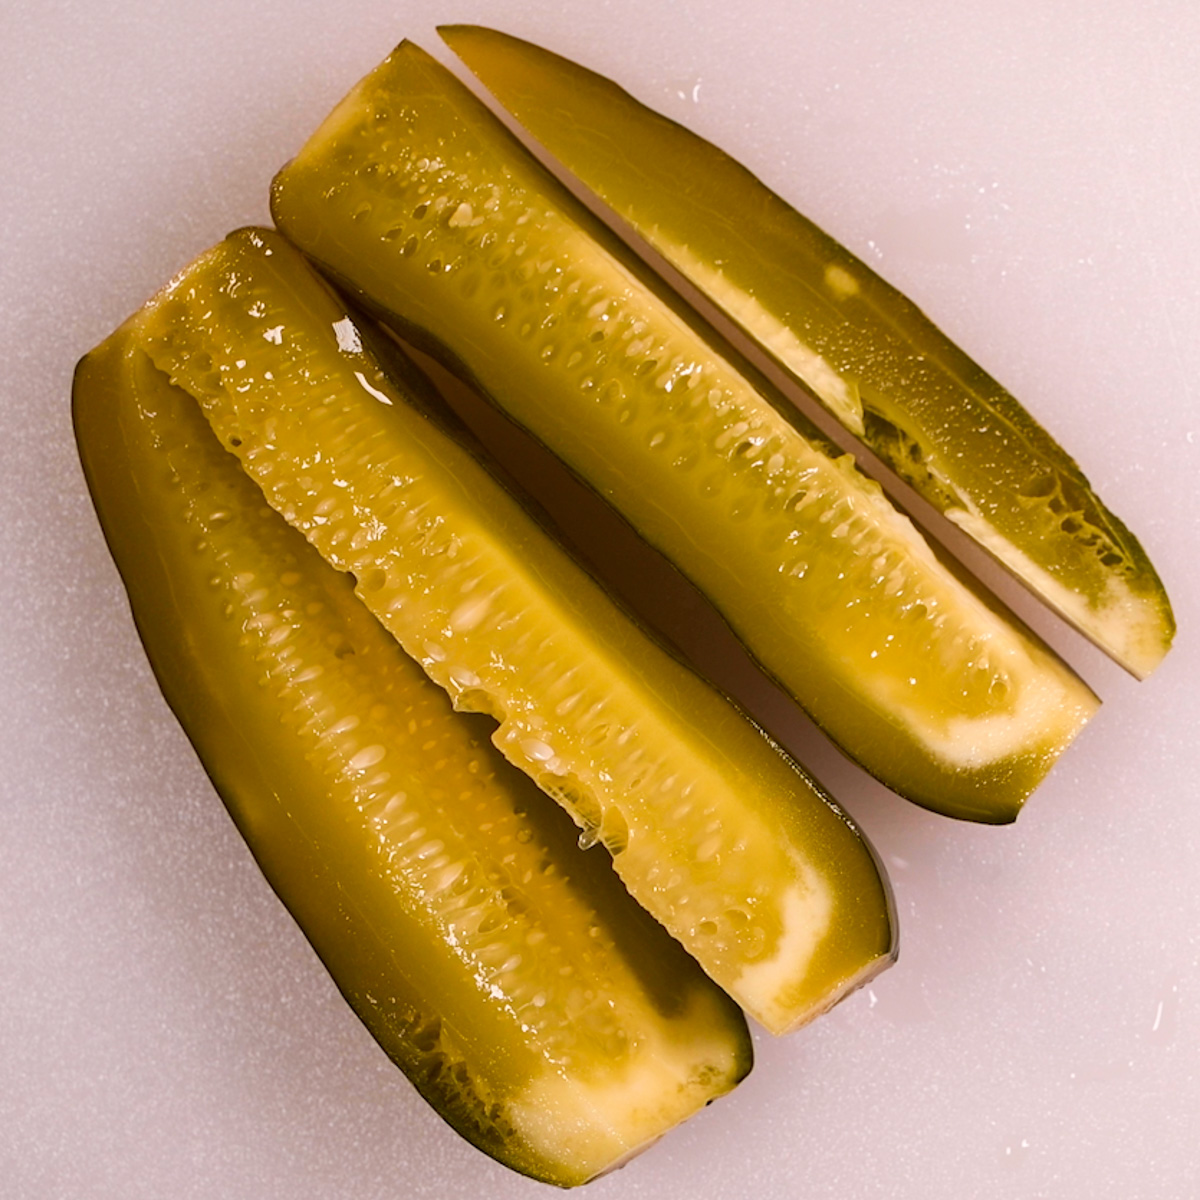 Sliced dill pickles.